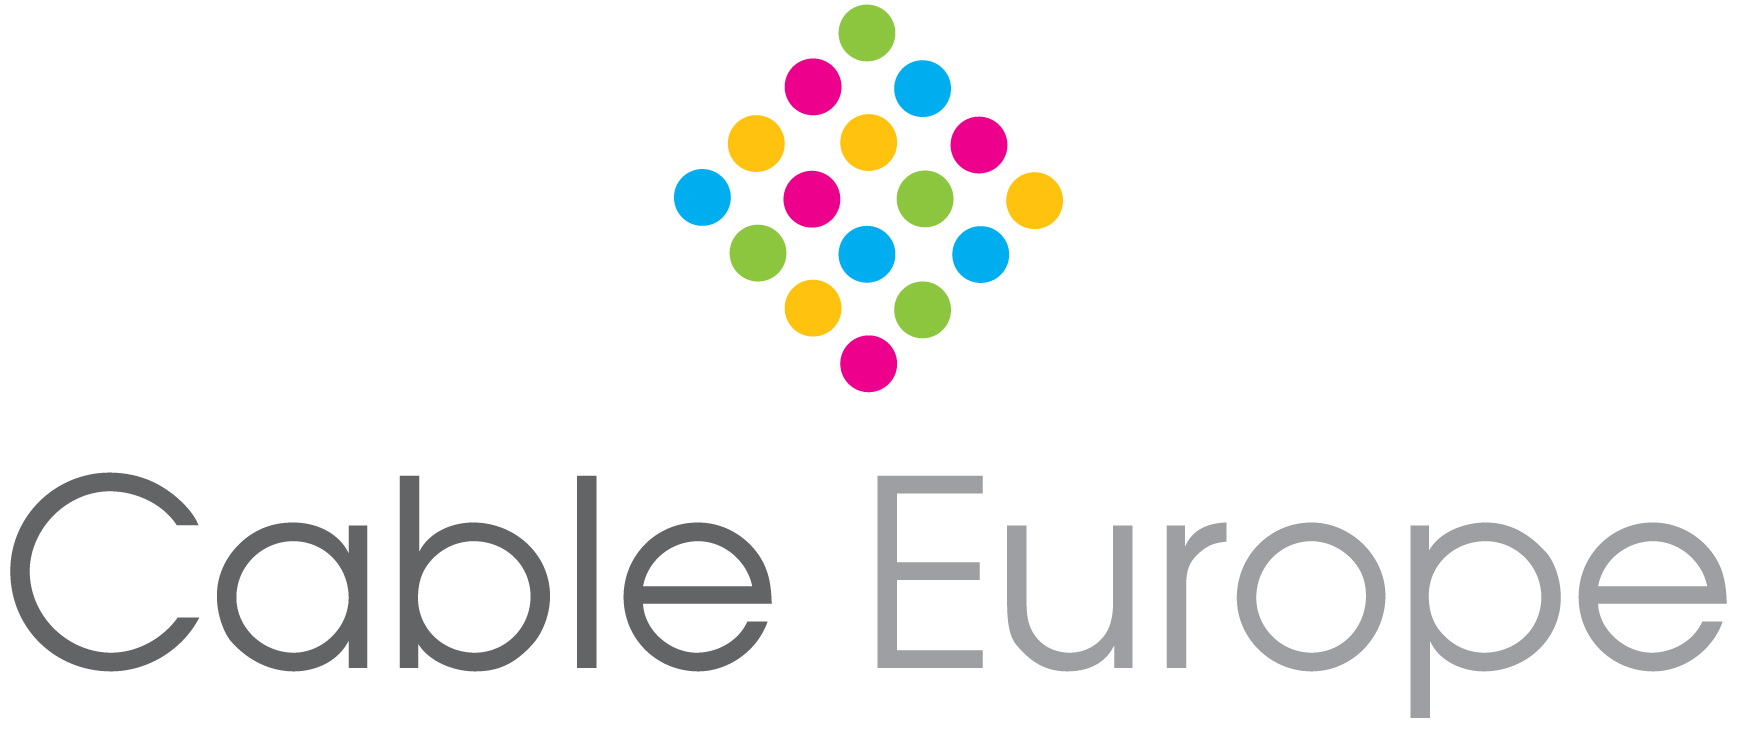 Cable Europe logo.jpg